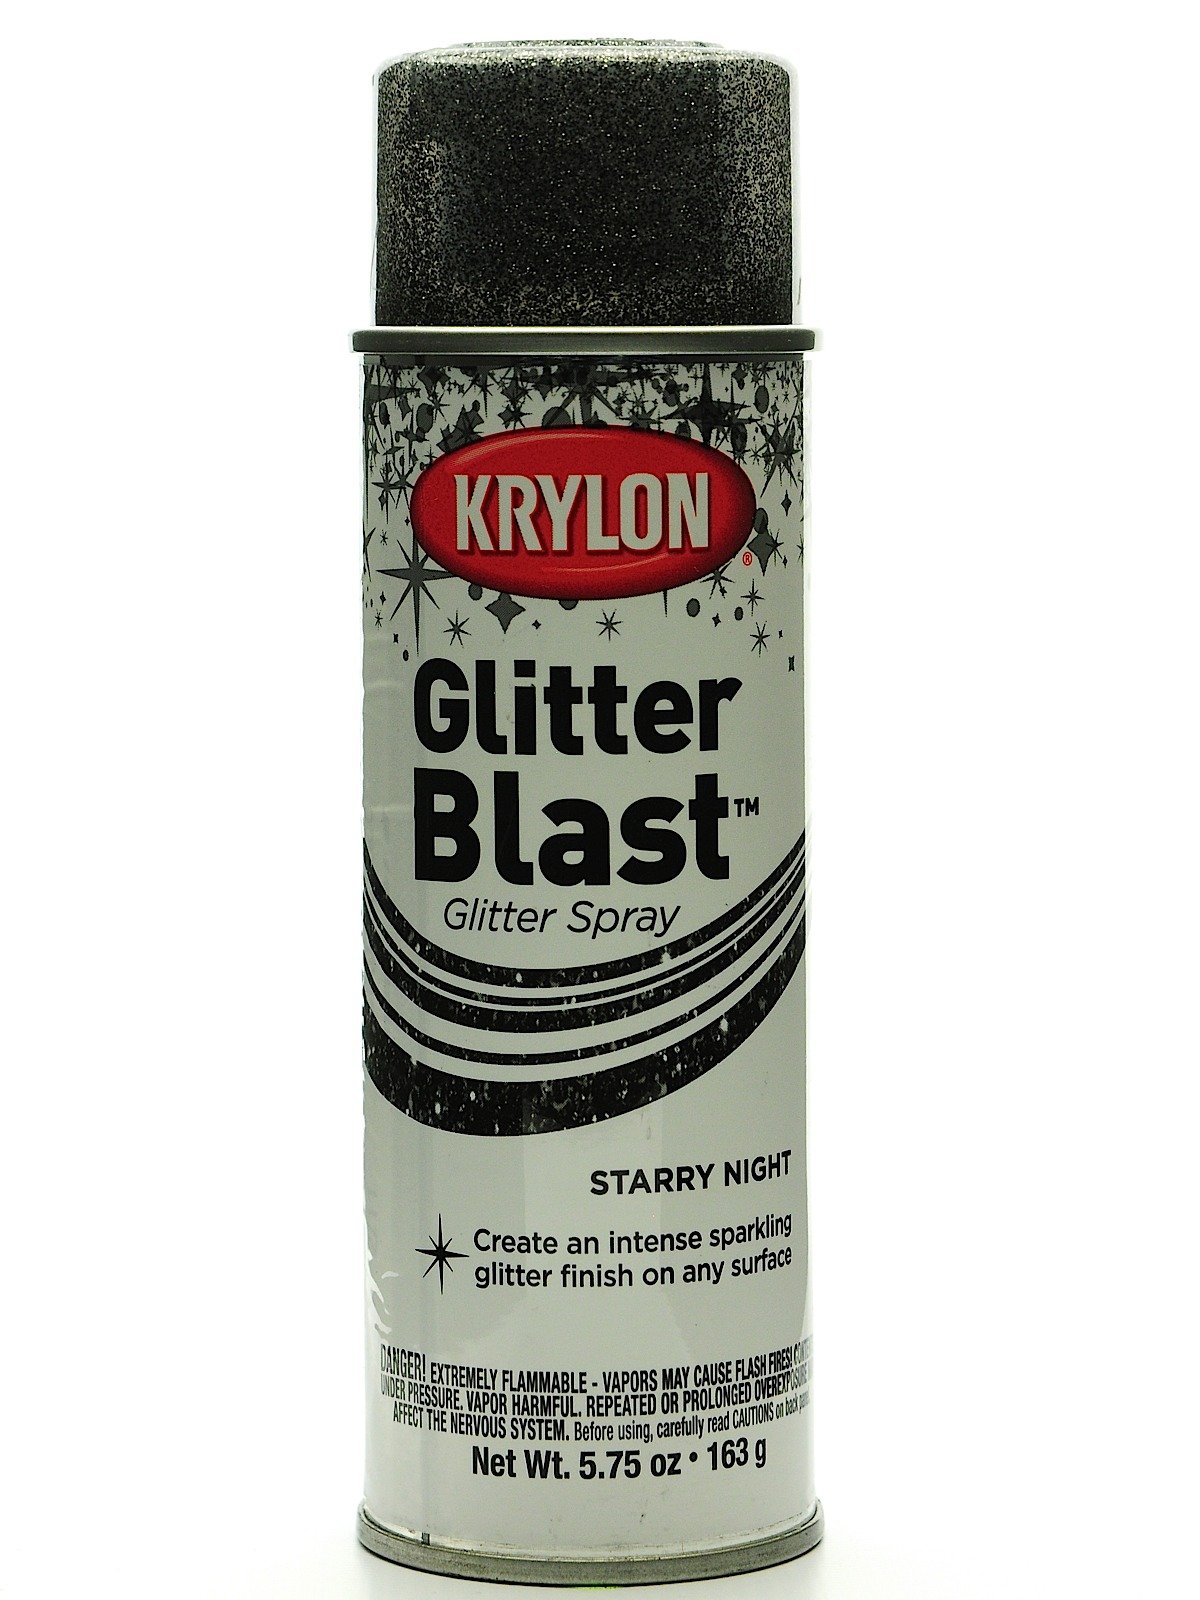 Krylon Glitter Blast Spray Paint - Starry Night, 5.75 oz can